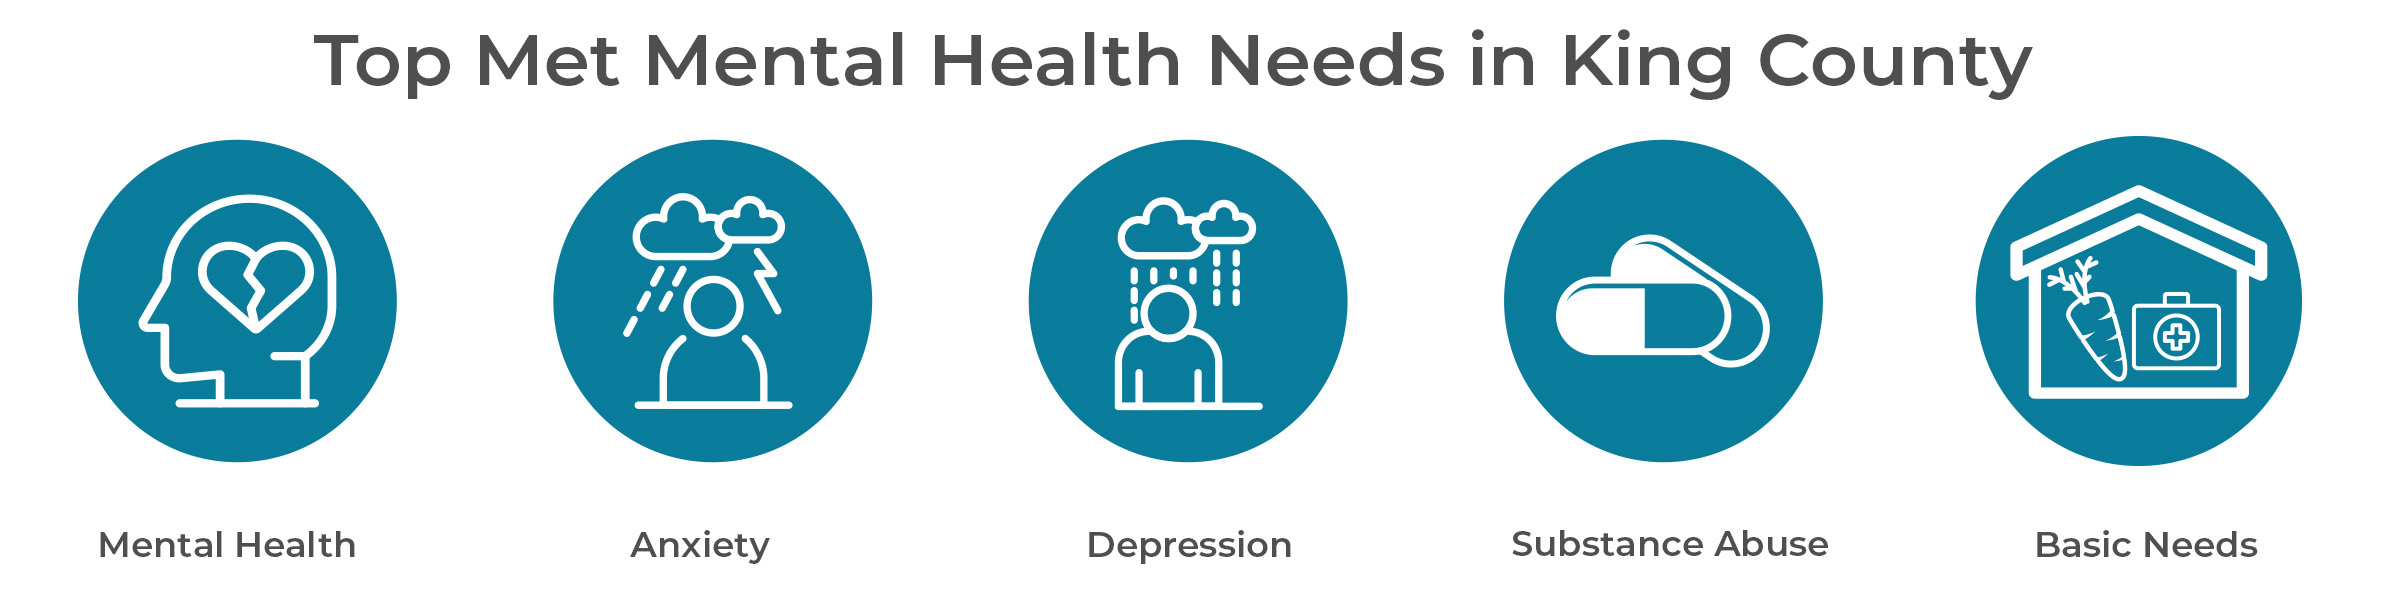 Icons depicting top met mental health needs in king county